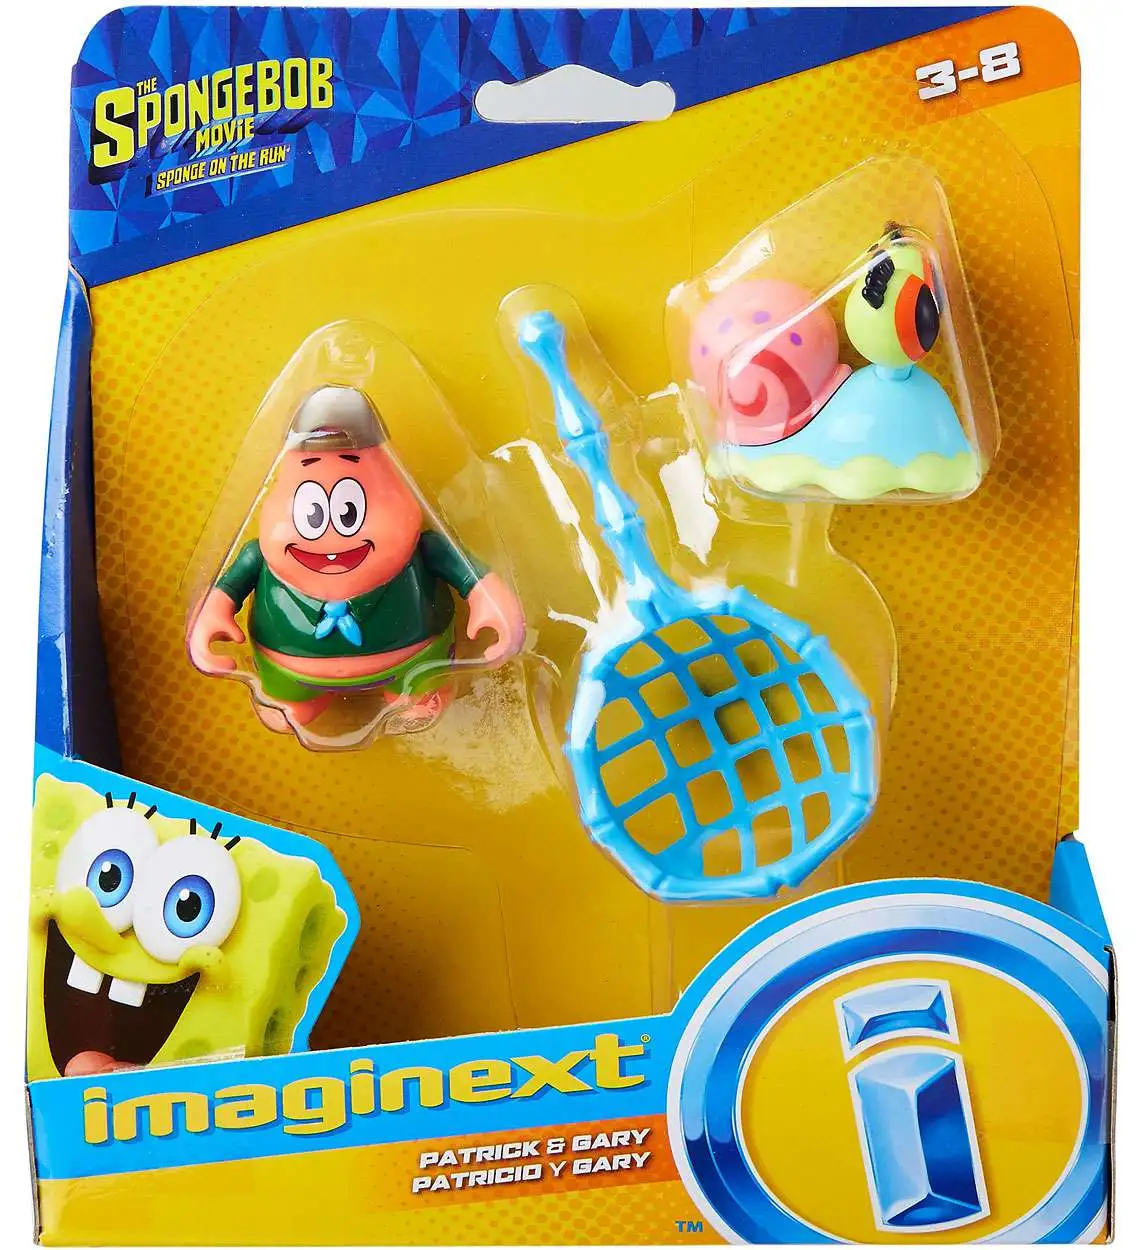 spongebob and patrick and gary